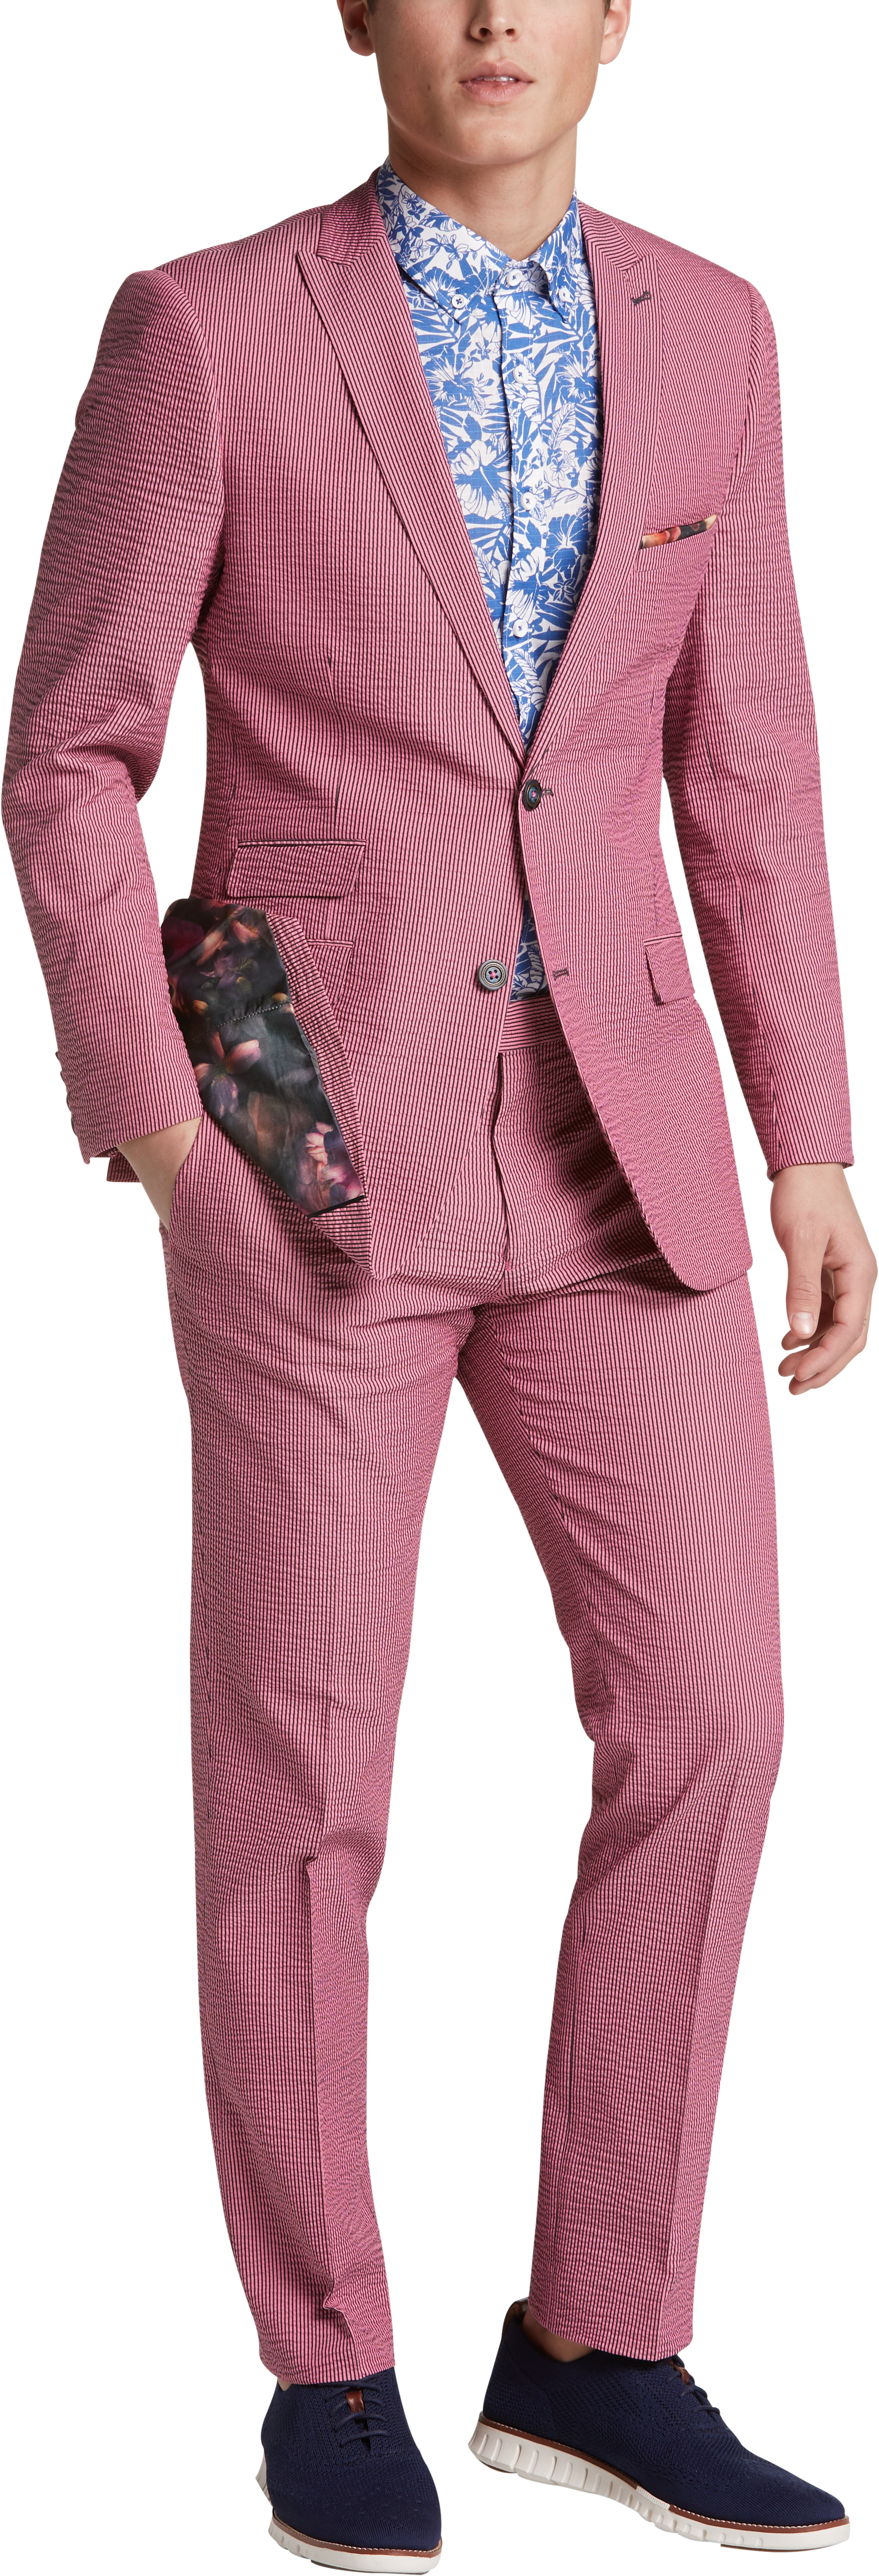 Paisley & Gray Slim Fit Suit Separates Coat, Pink Seersucker Stripe ...